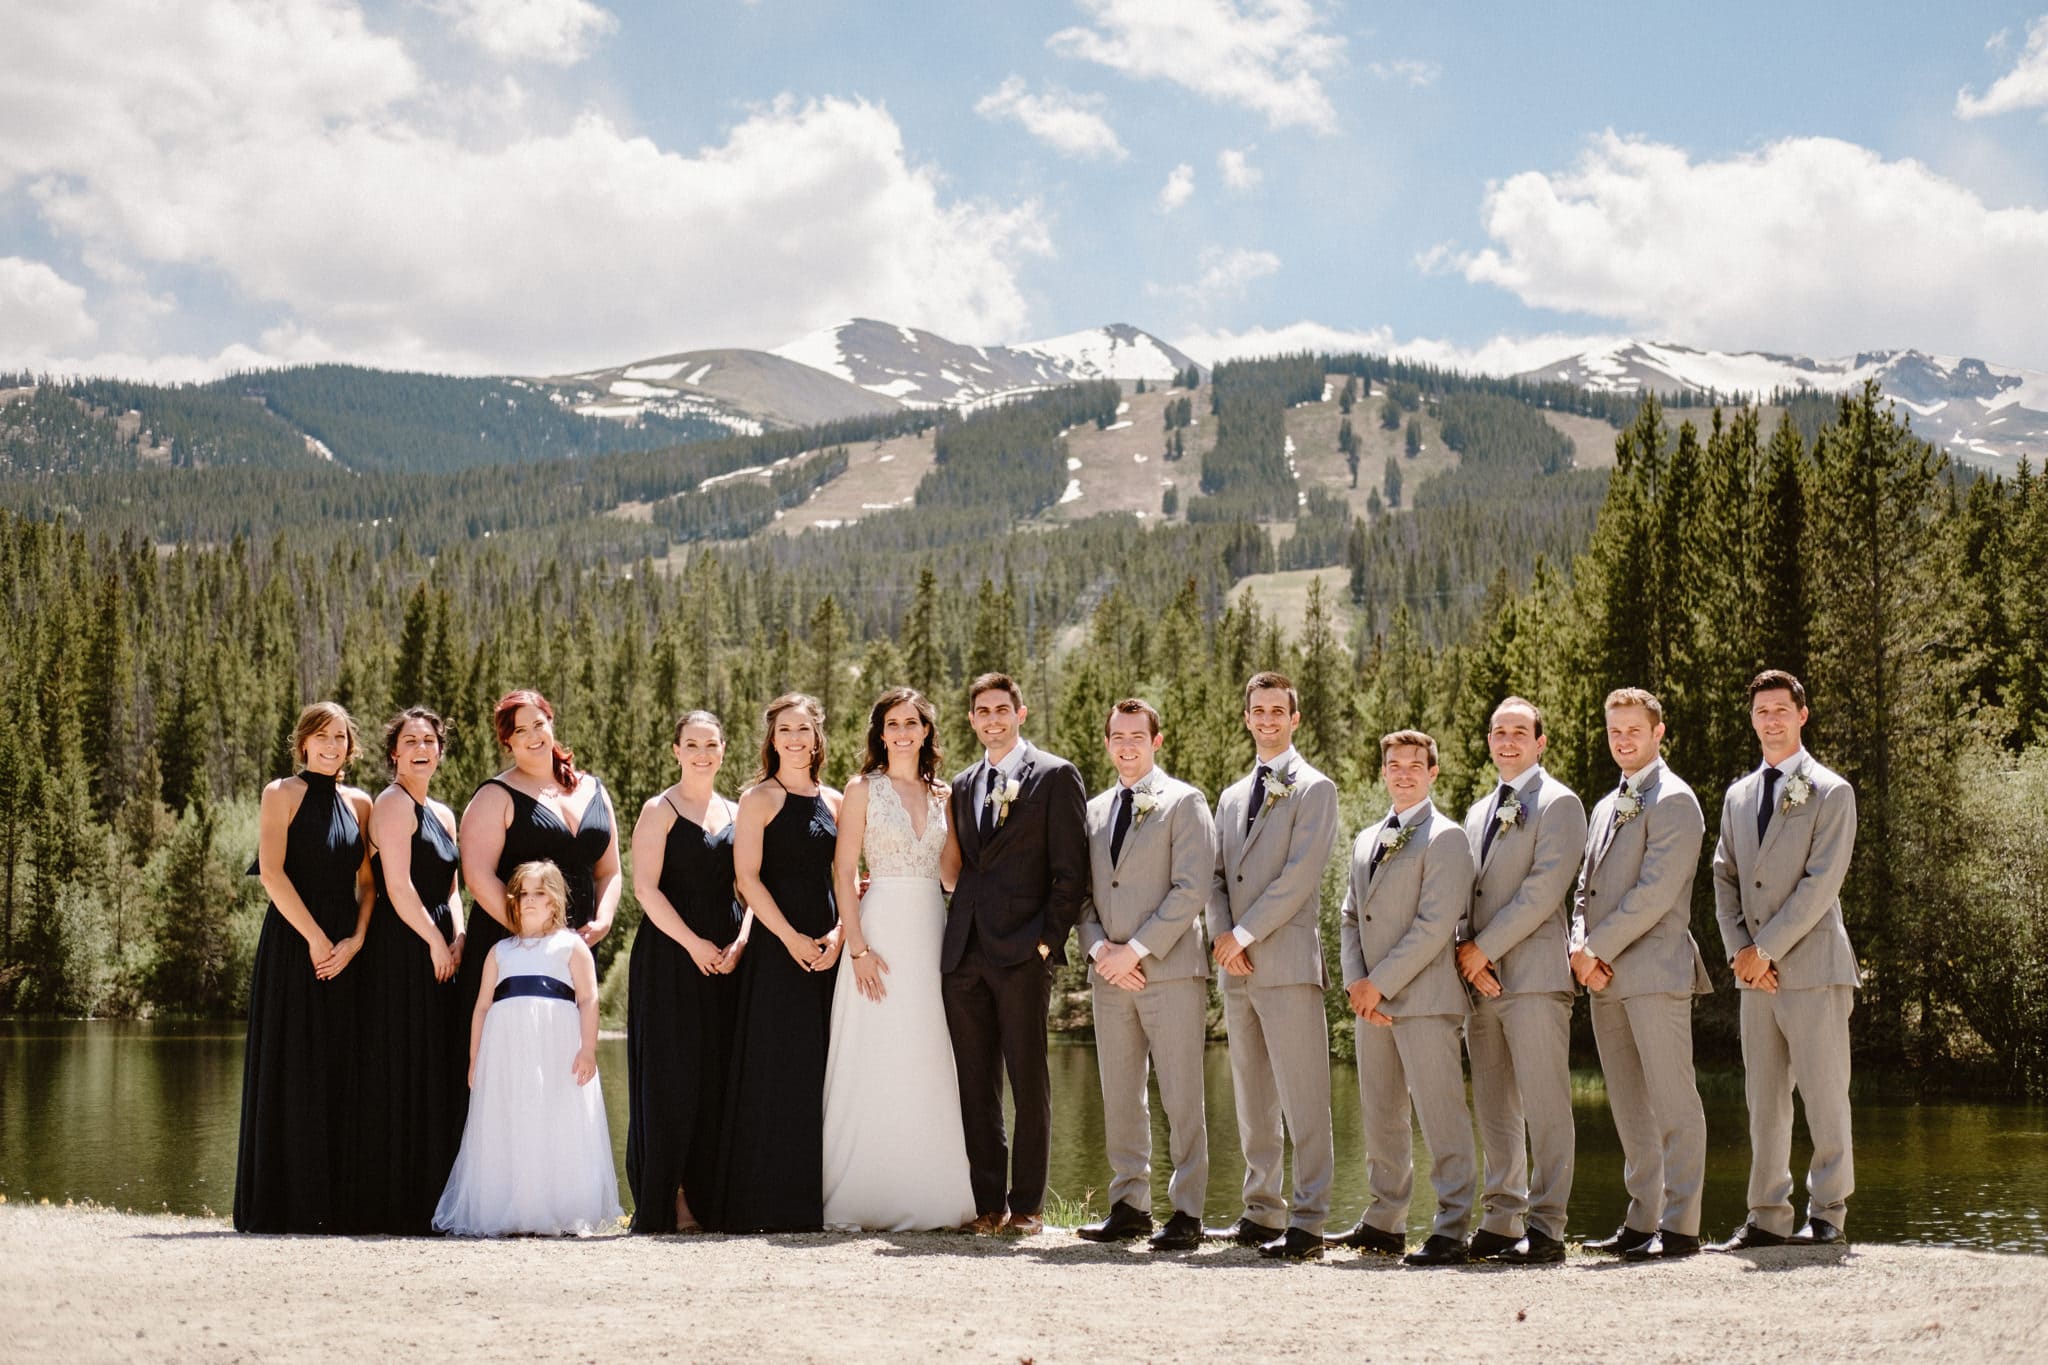 Wedding Party photos at Sawmill Reservoir in Breckenridge, Colorado wedding photographer